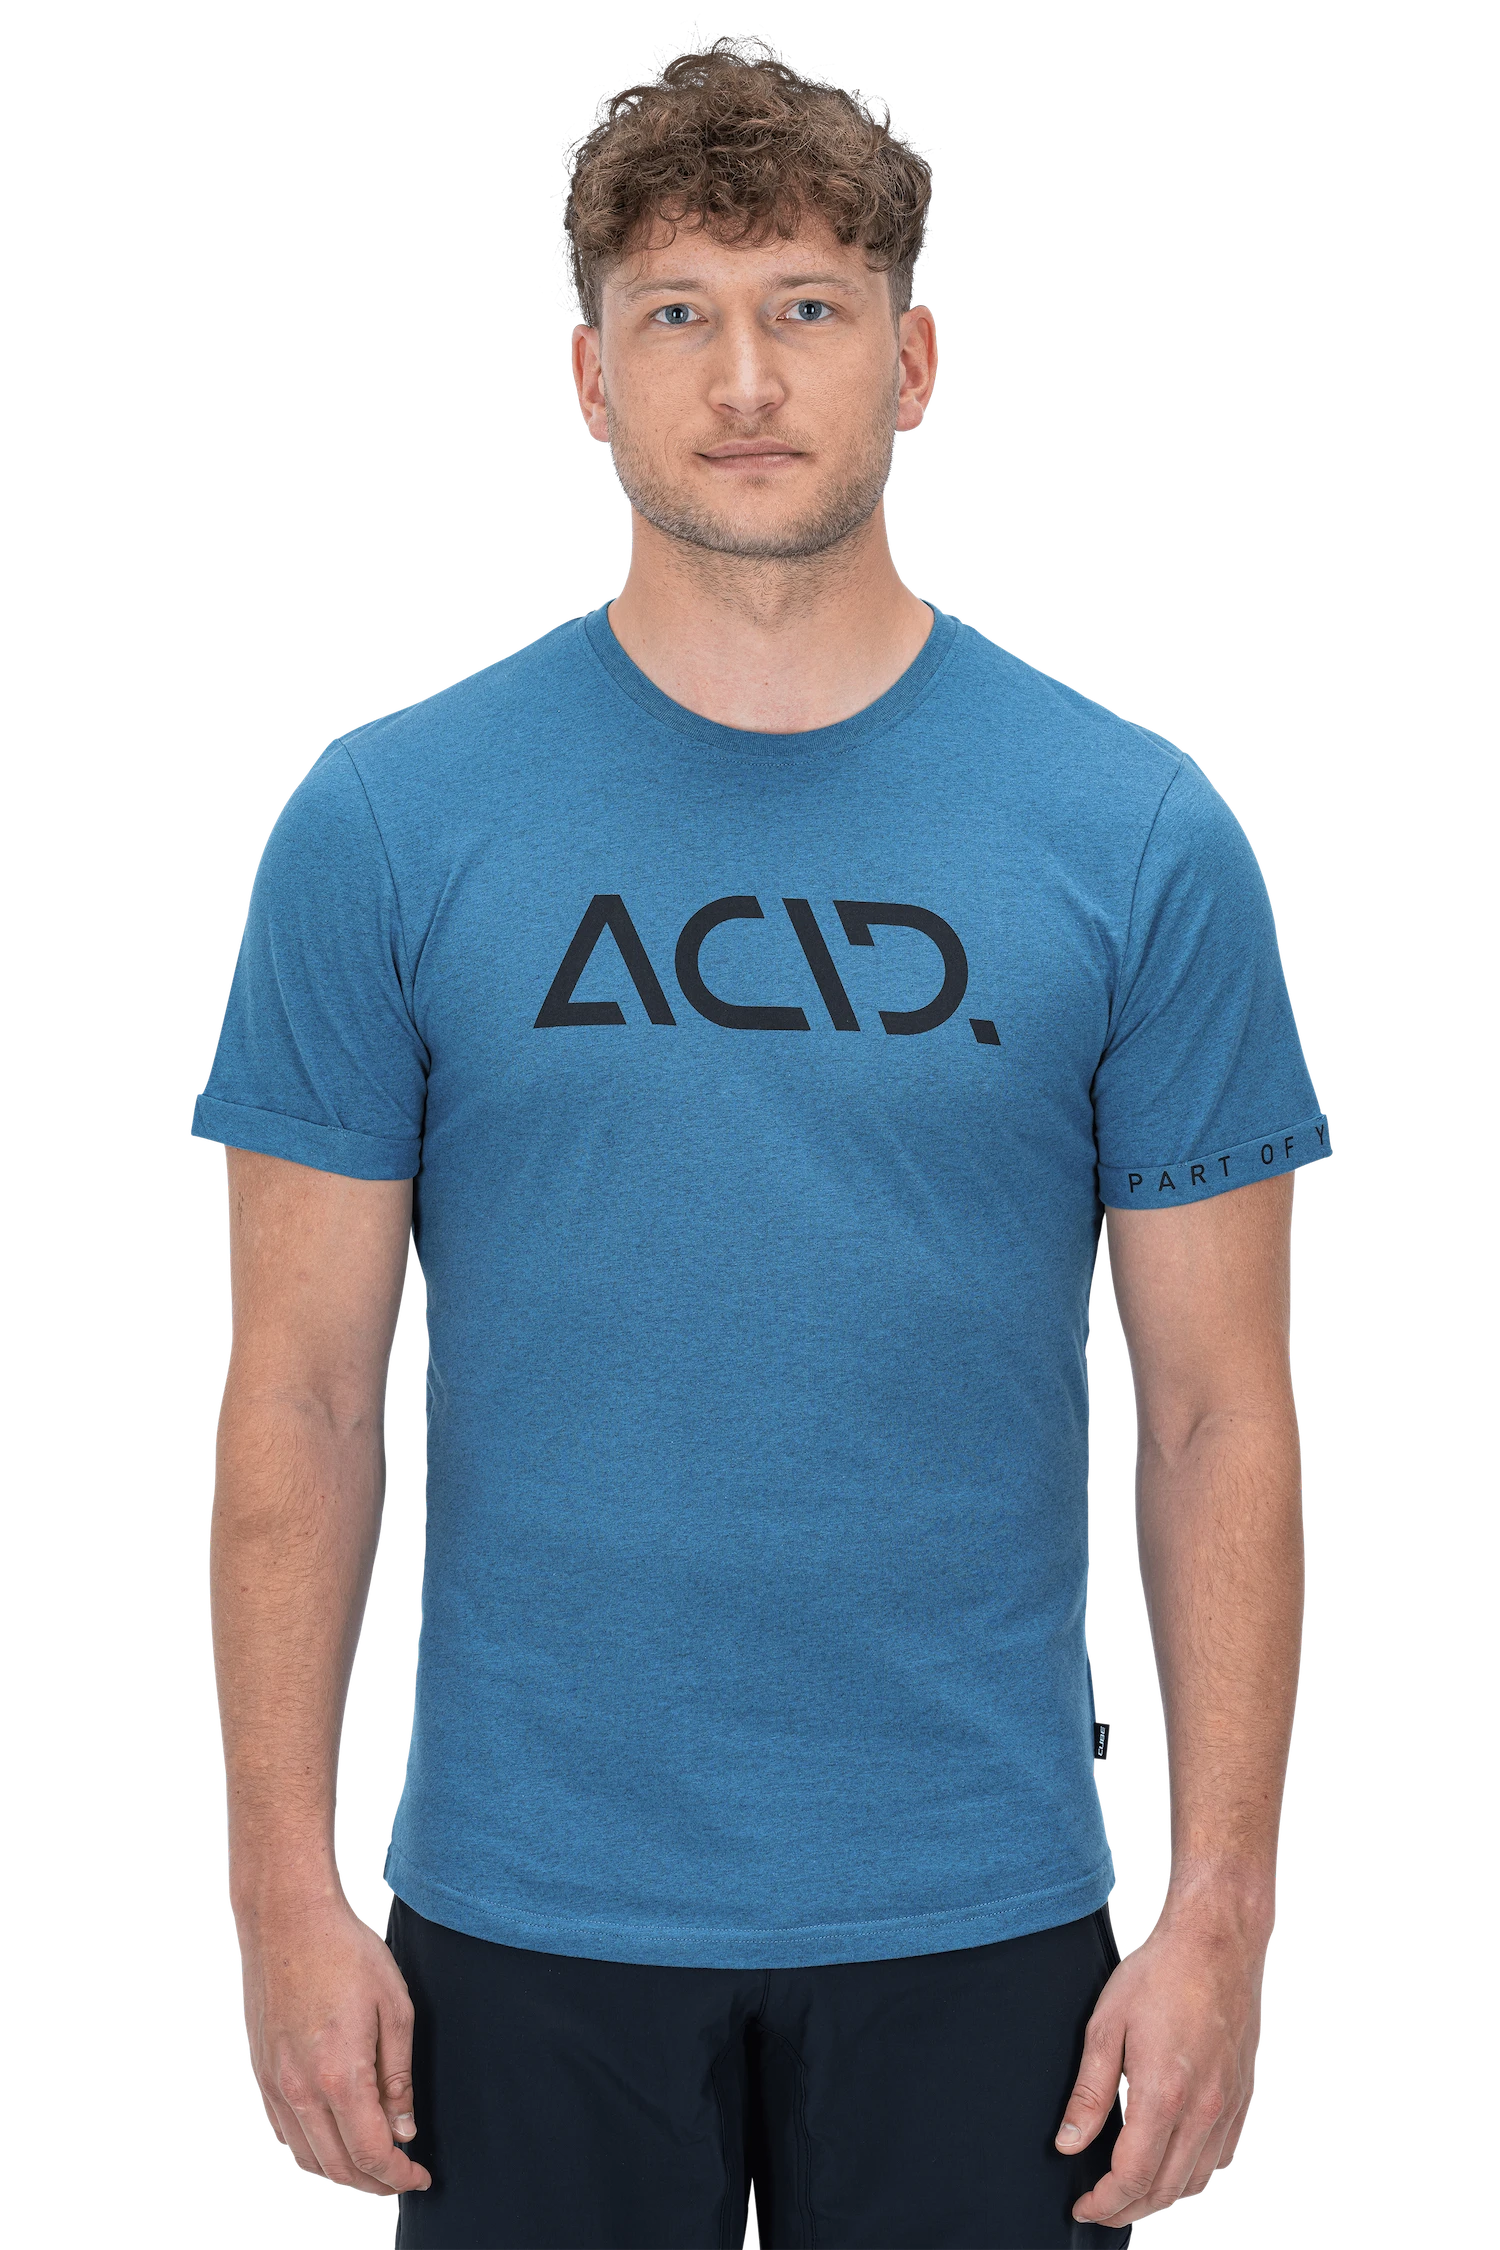 ACID Organic T-Shirt Classic Logo